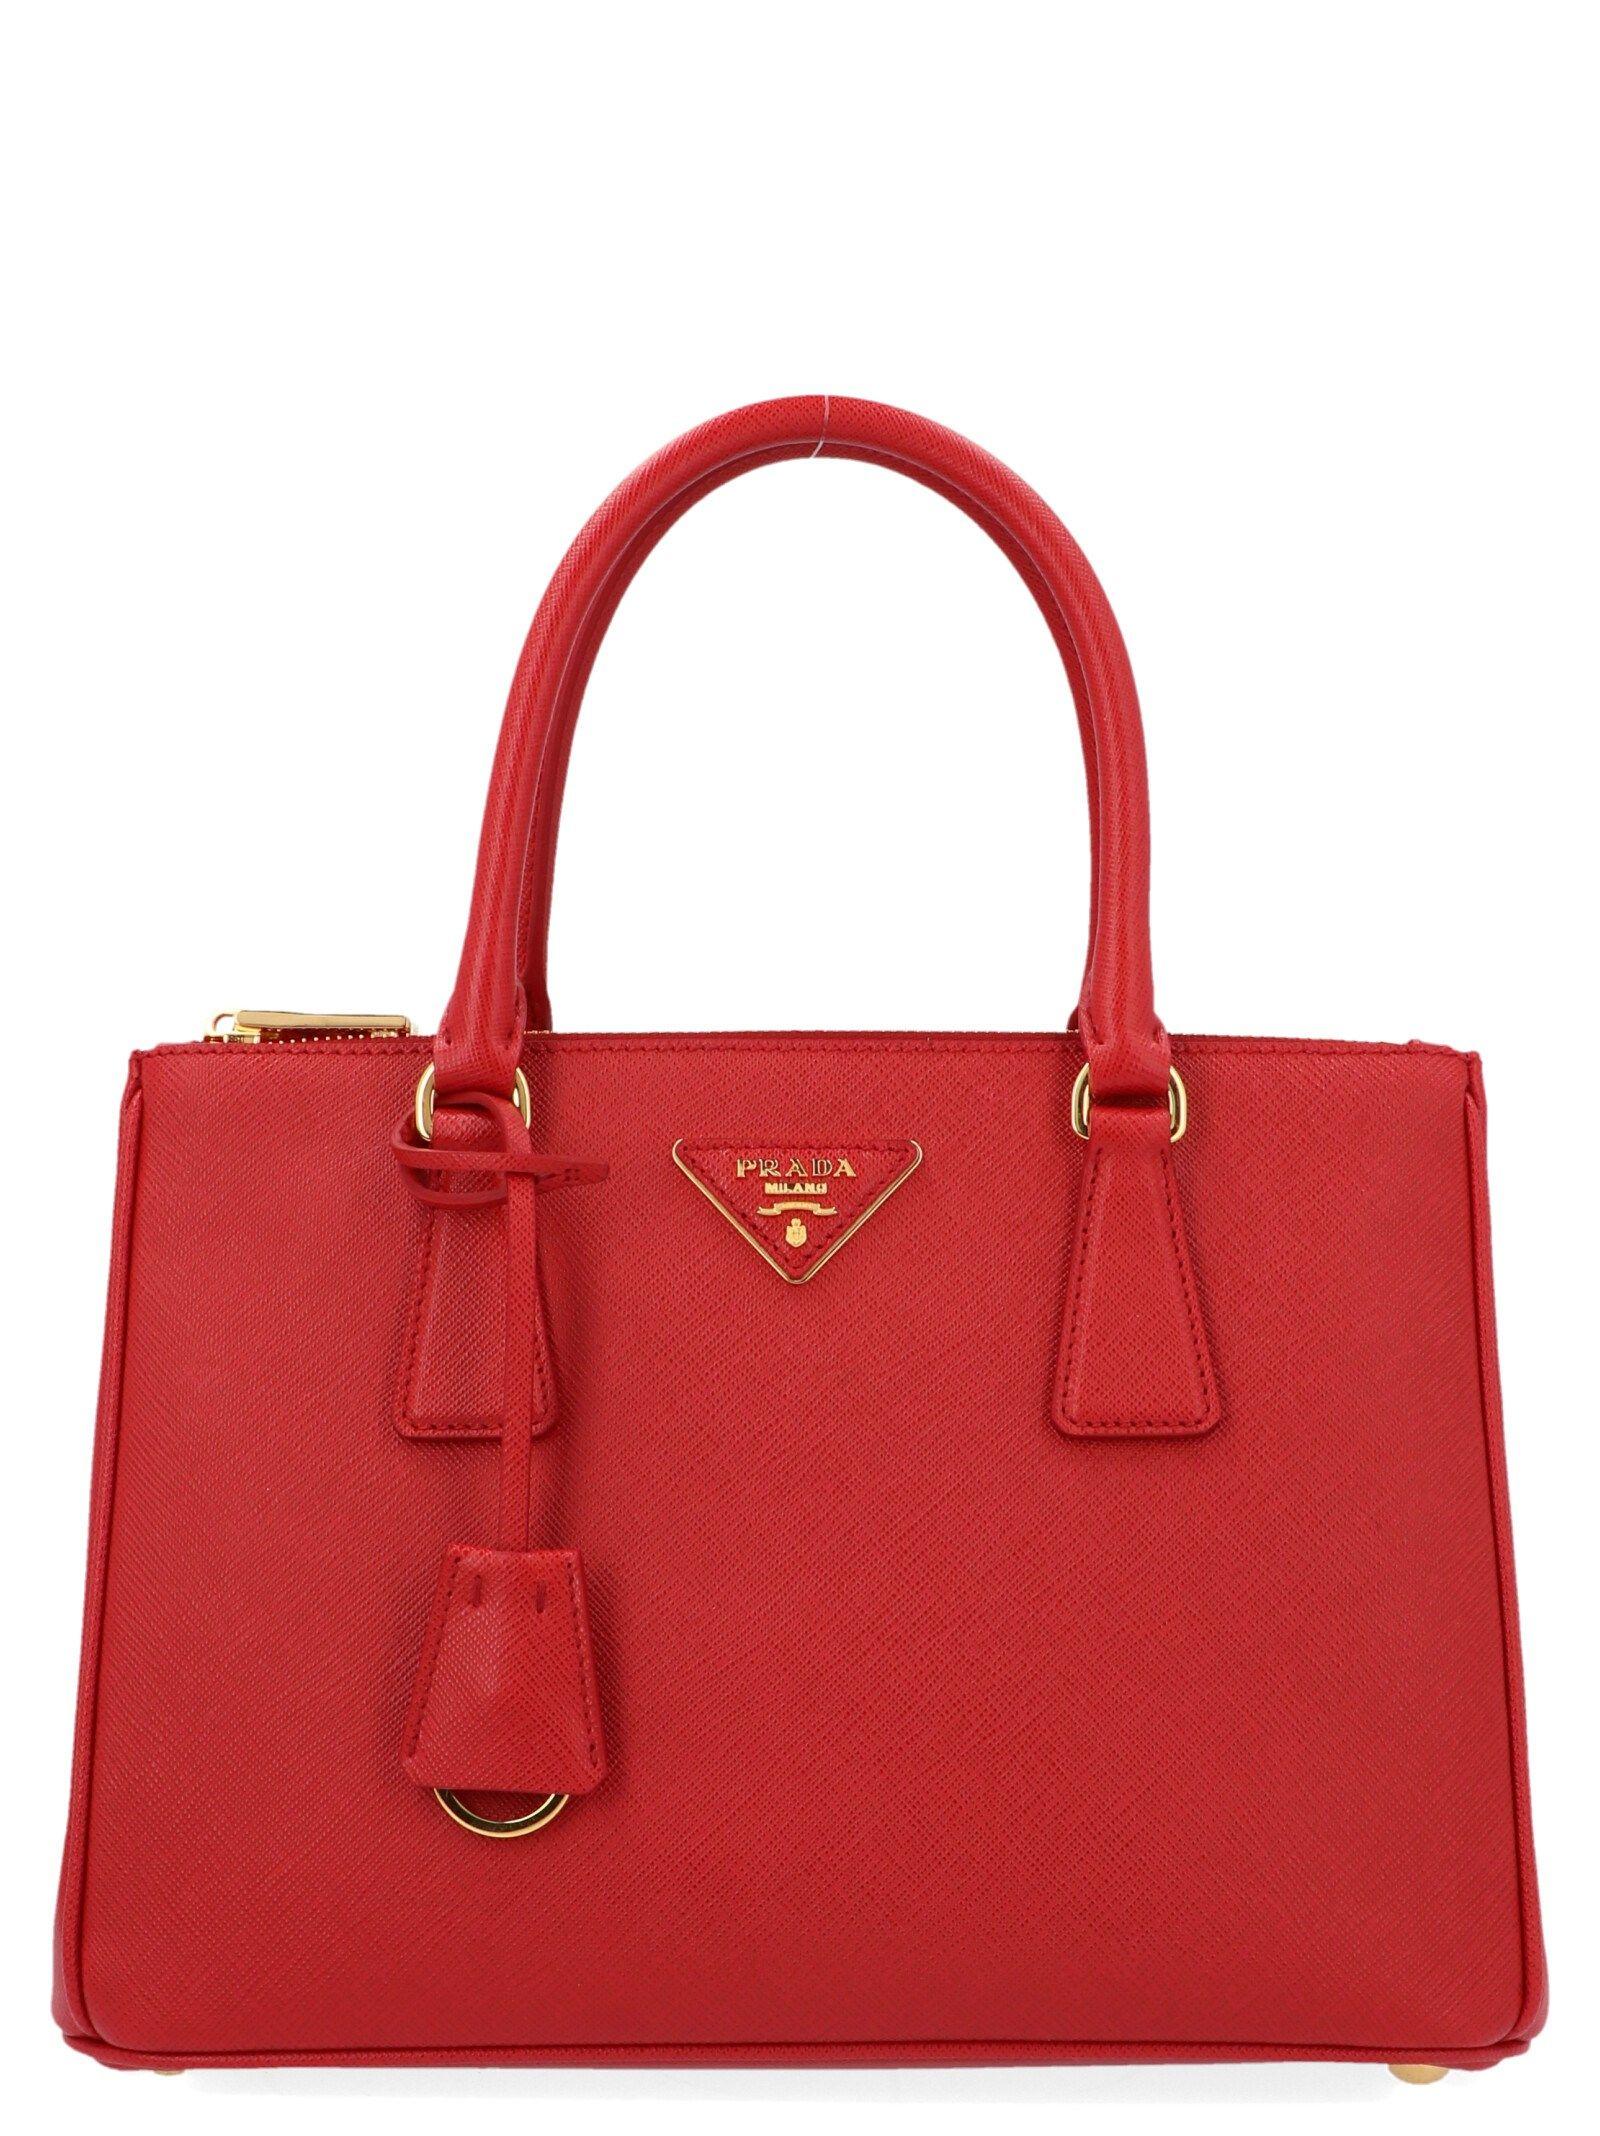 Prada Red Leather Handbag - Lyst